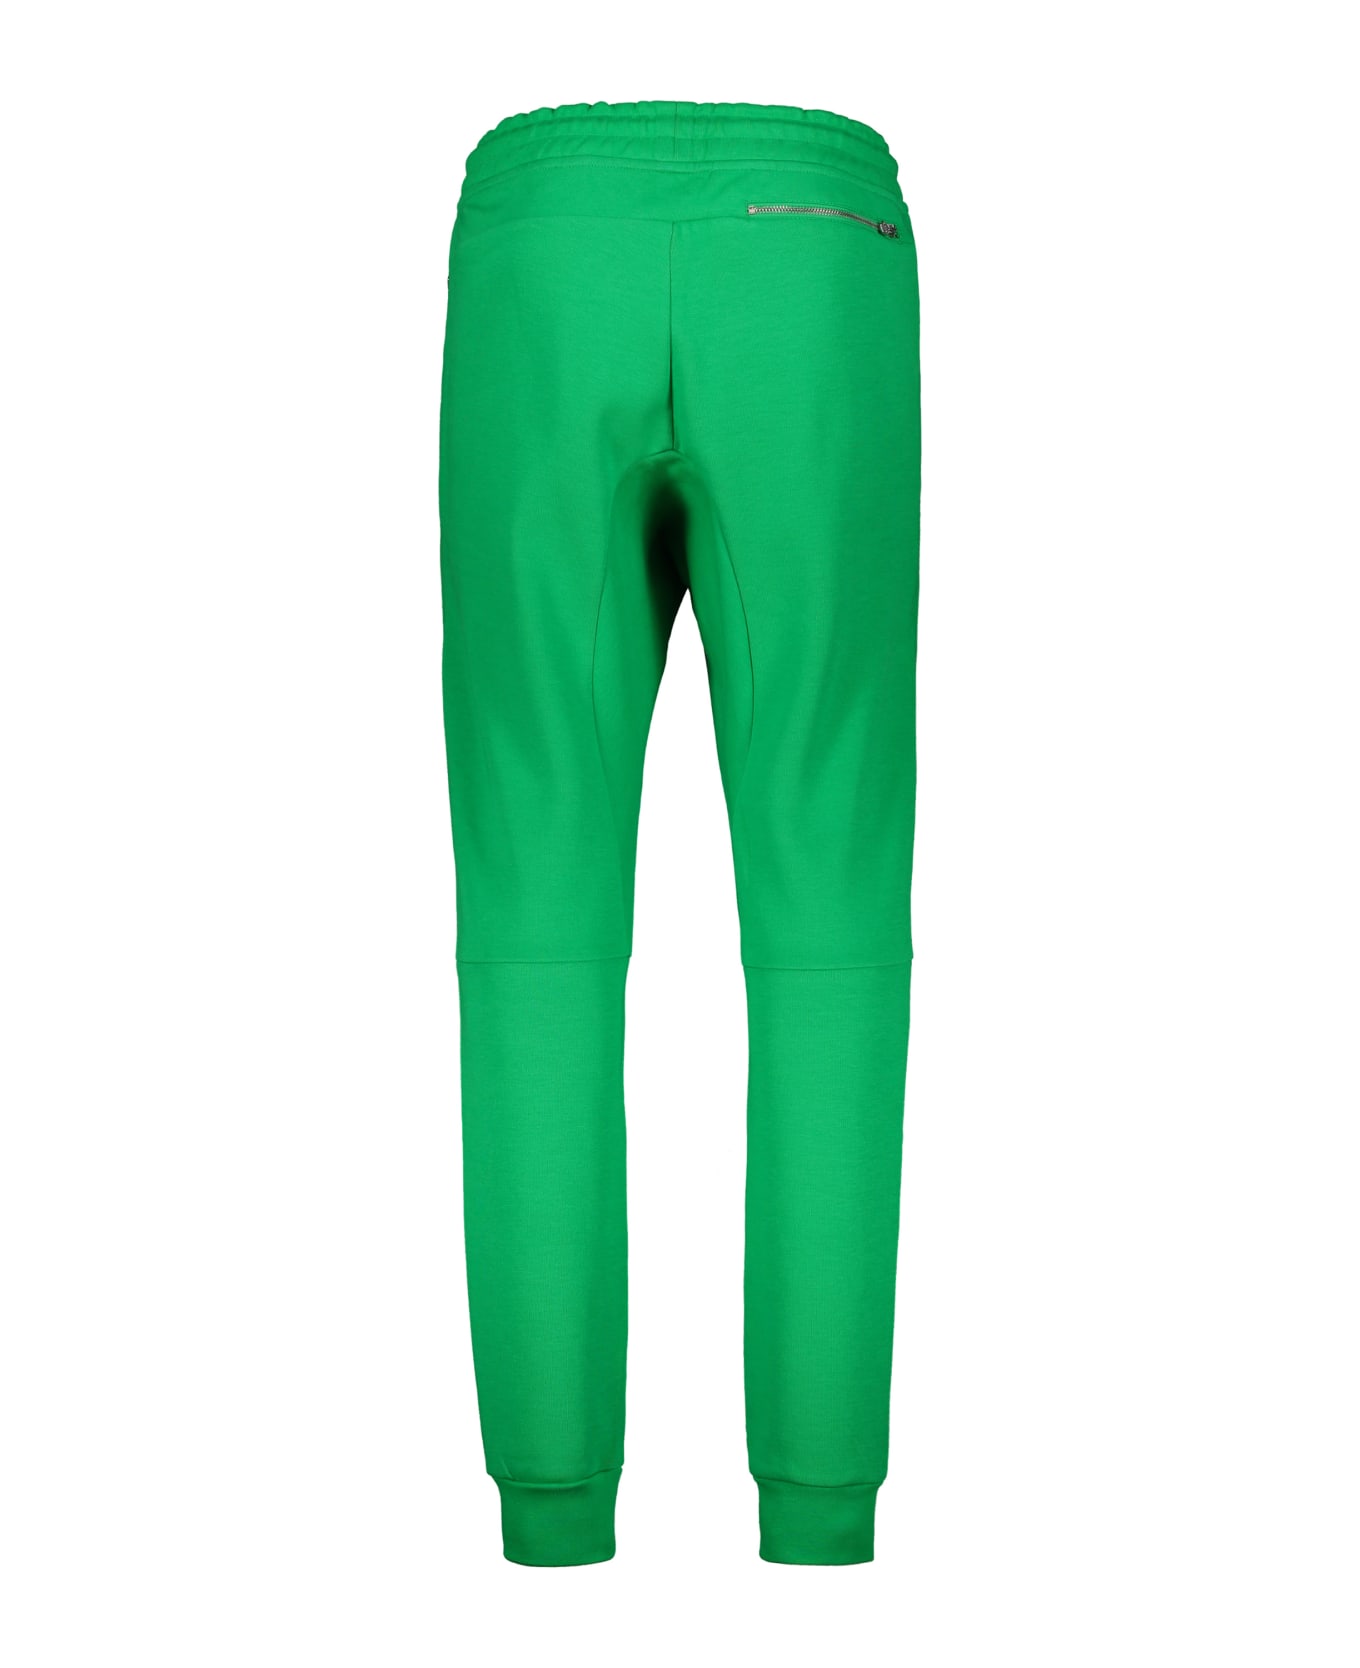 BALR. Cotton Track-pants - green